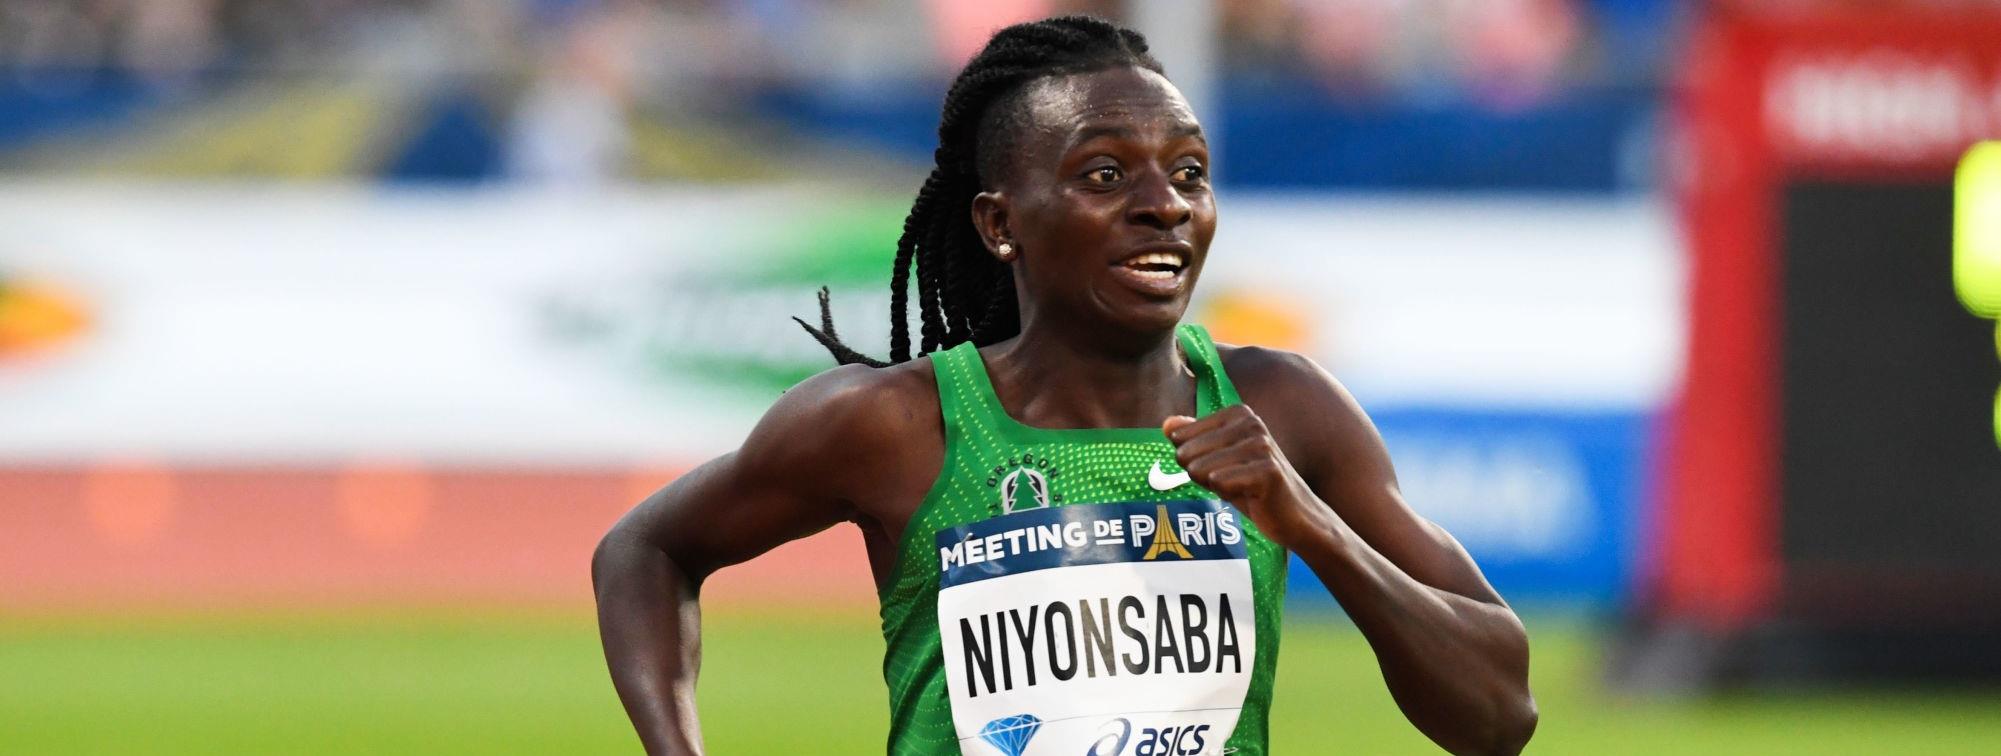 Athlétisme: La Burundaise Niyonsaba bat le record du monde 2000 m